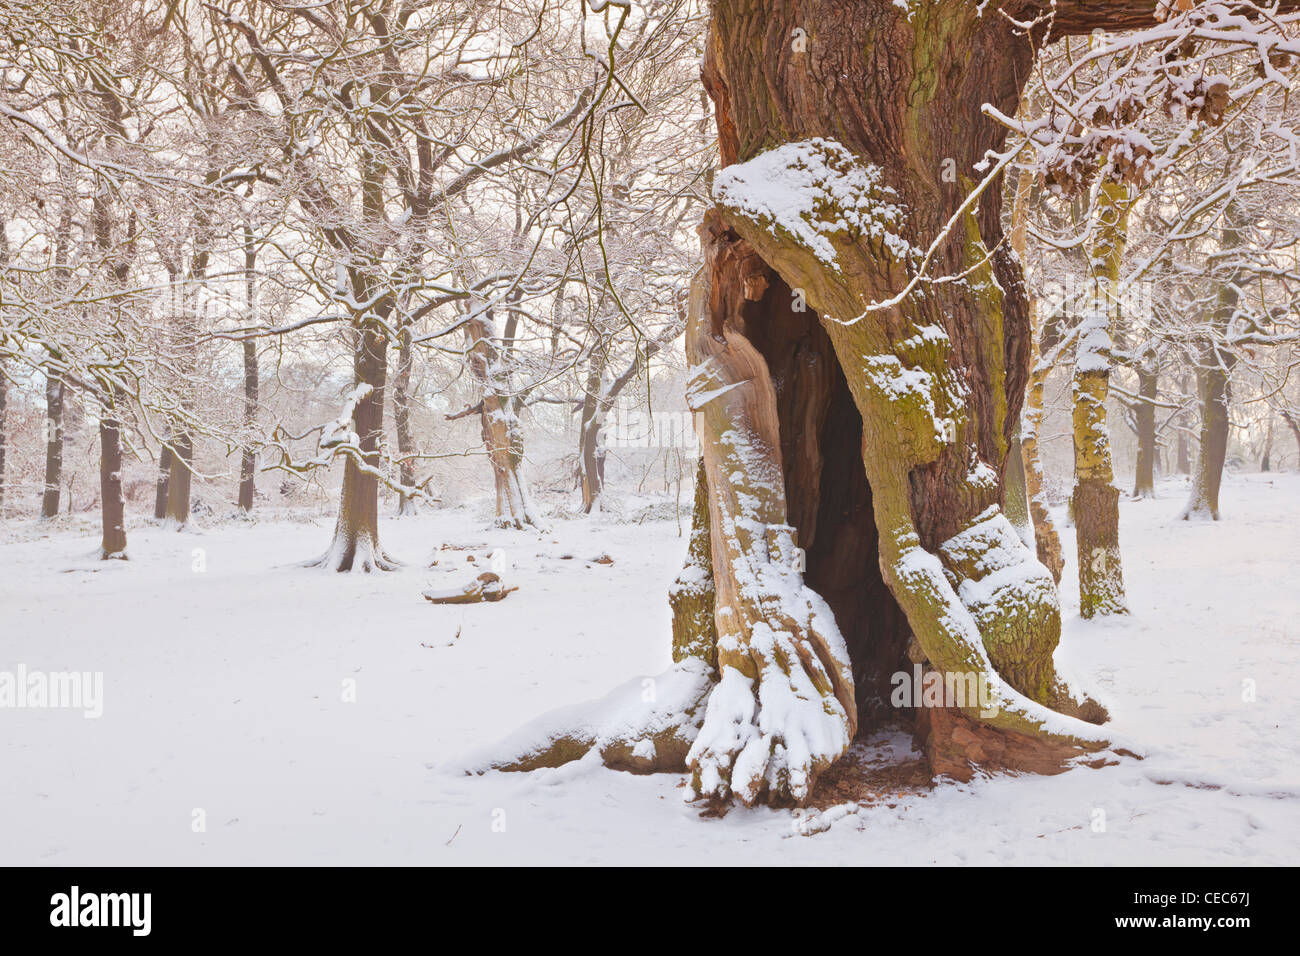 Albero di quercia nella neve fresca foresta di Sherwood country park edwinstowe nottinghamshire England Regno unito Gb eu europe Foto Stock